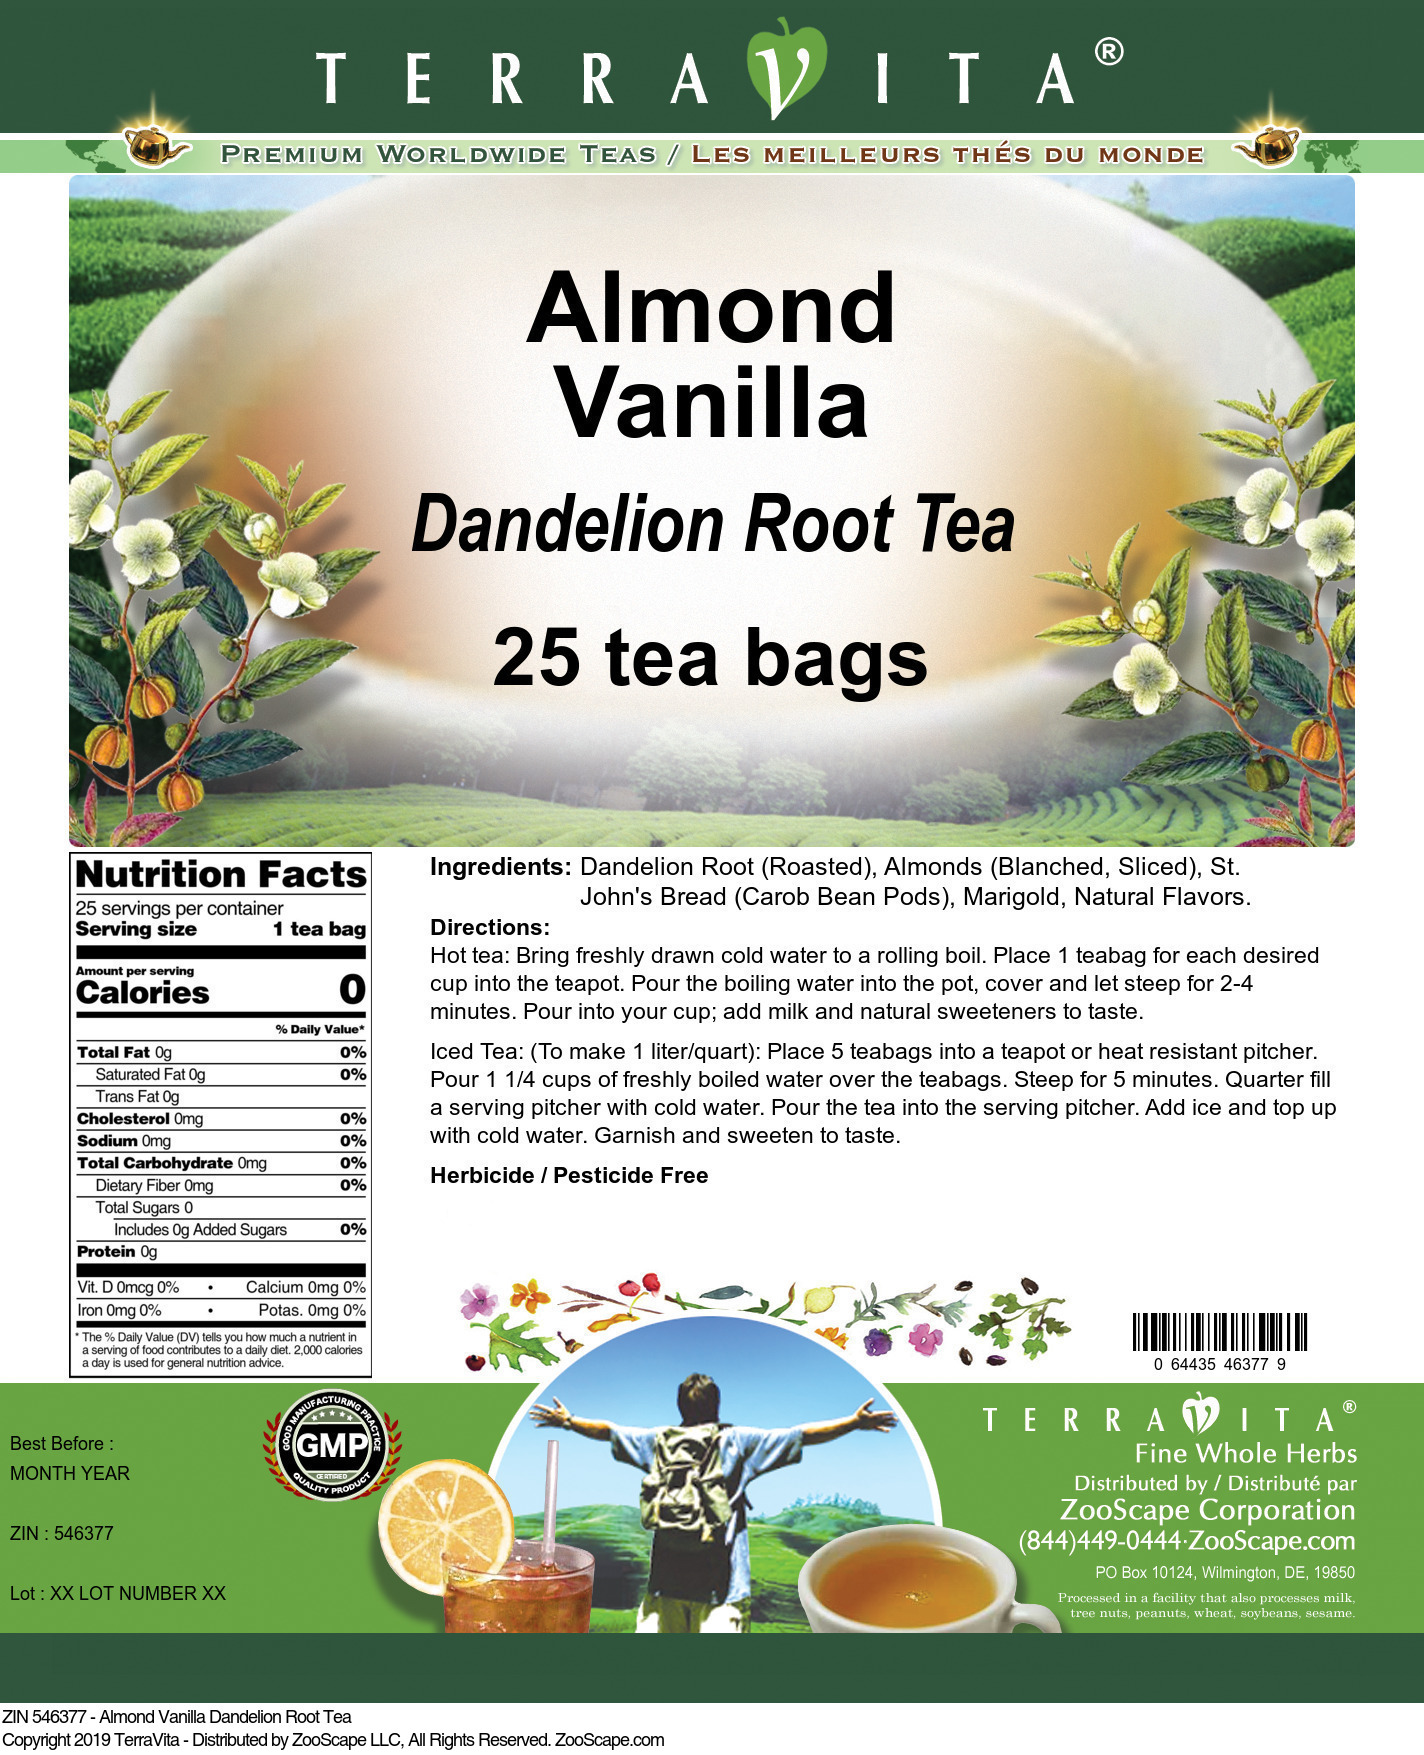 Almond Vanilla Dandelion Root Tea - Label